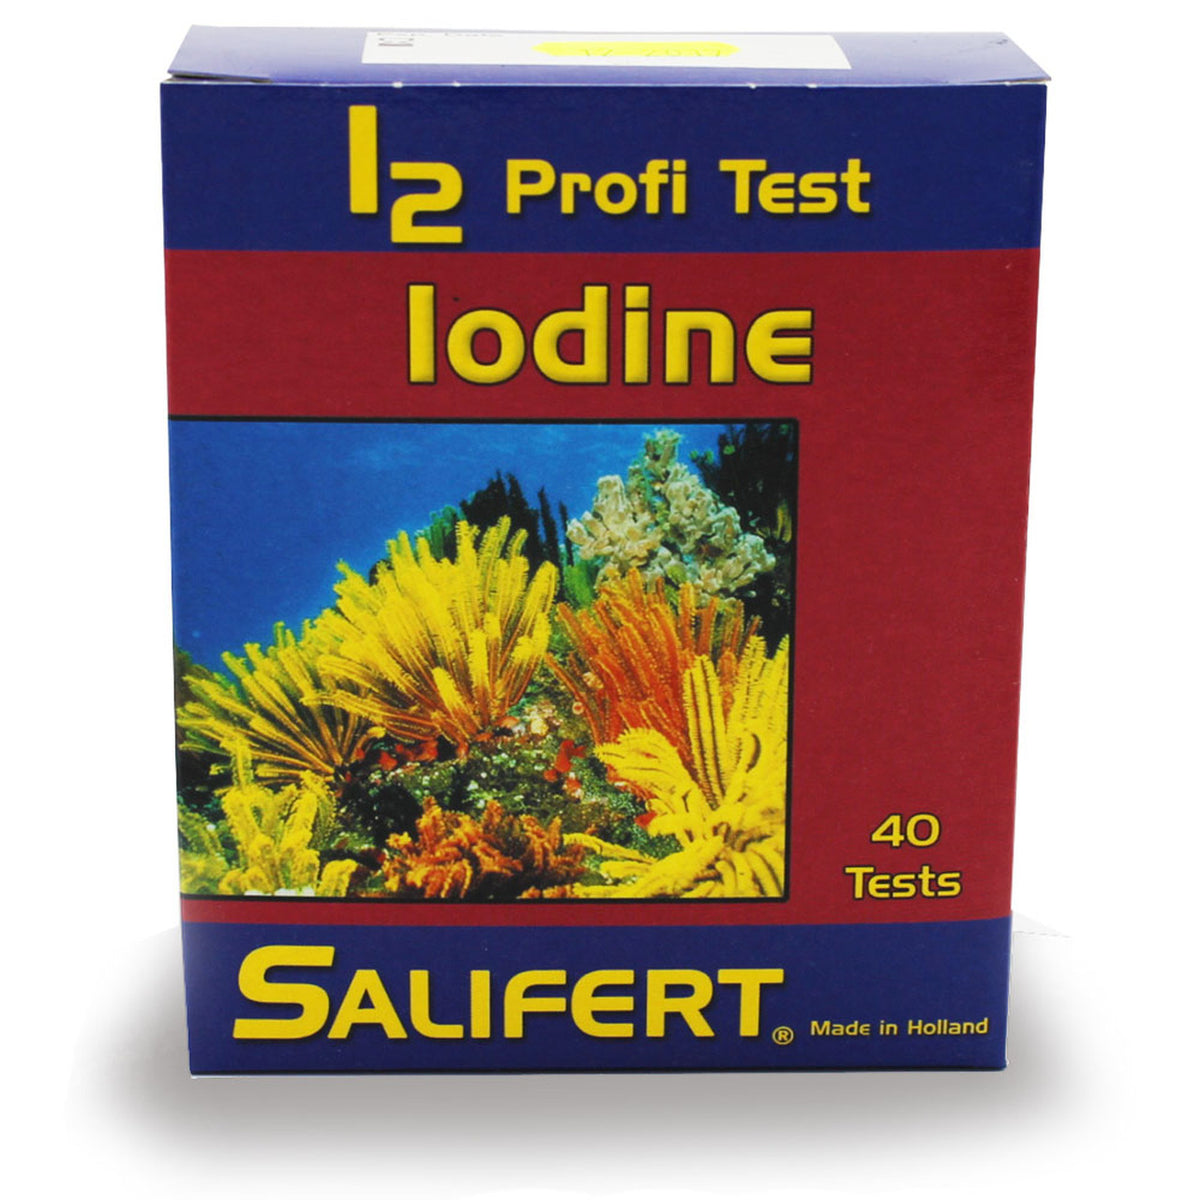 Salifert Iodine (I2) Test Kit